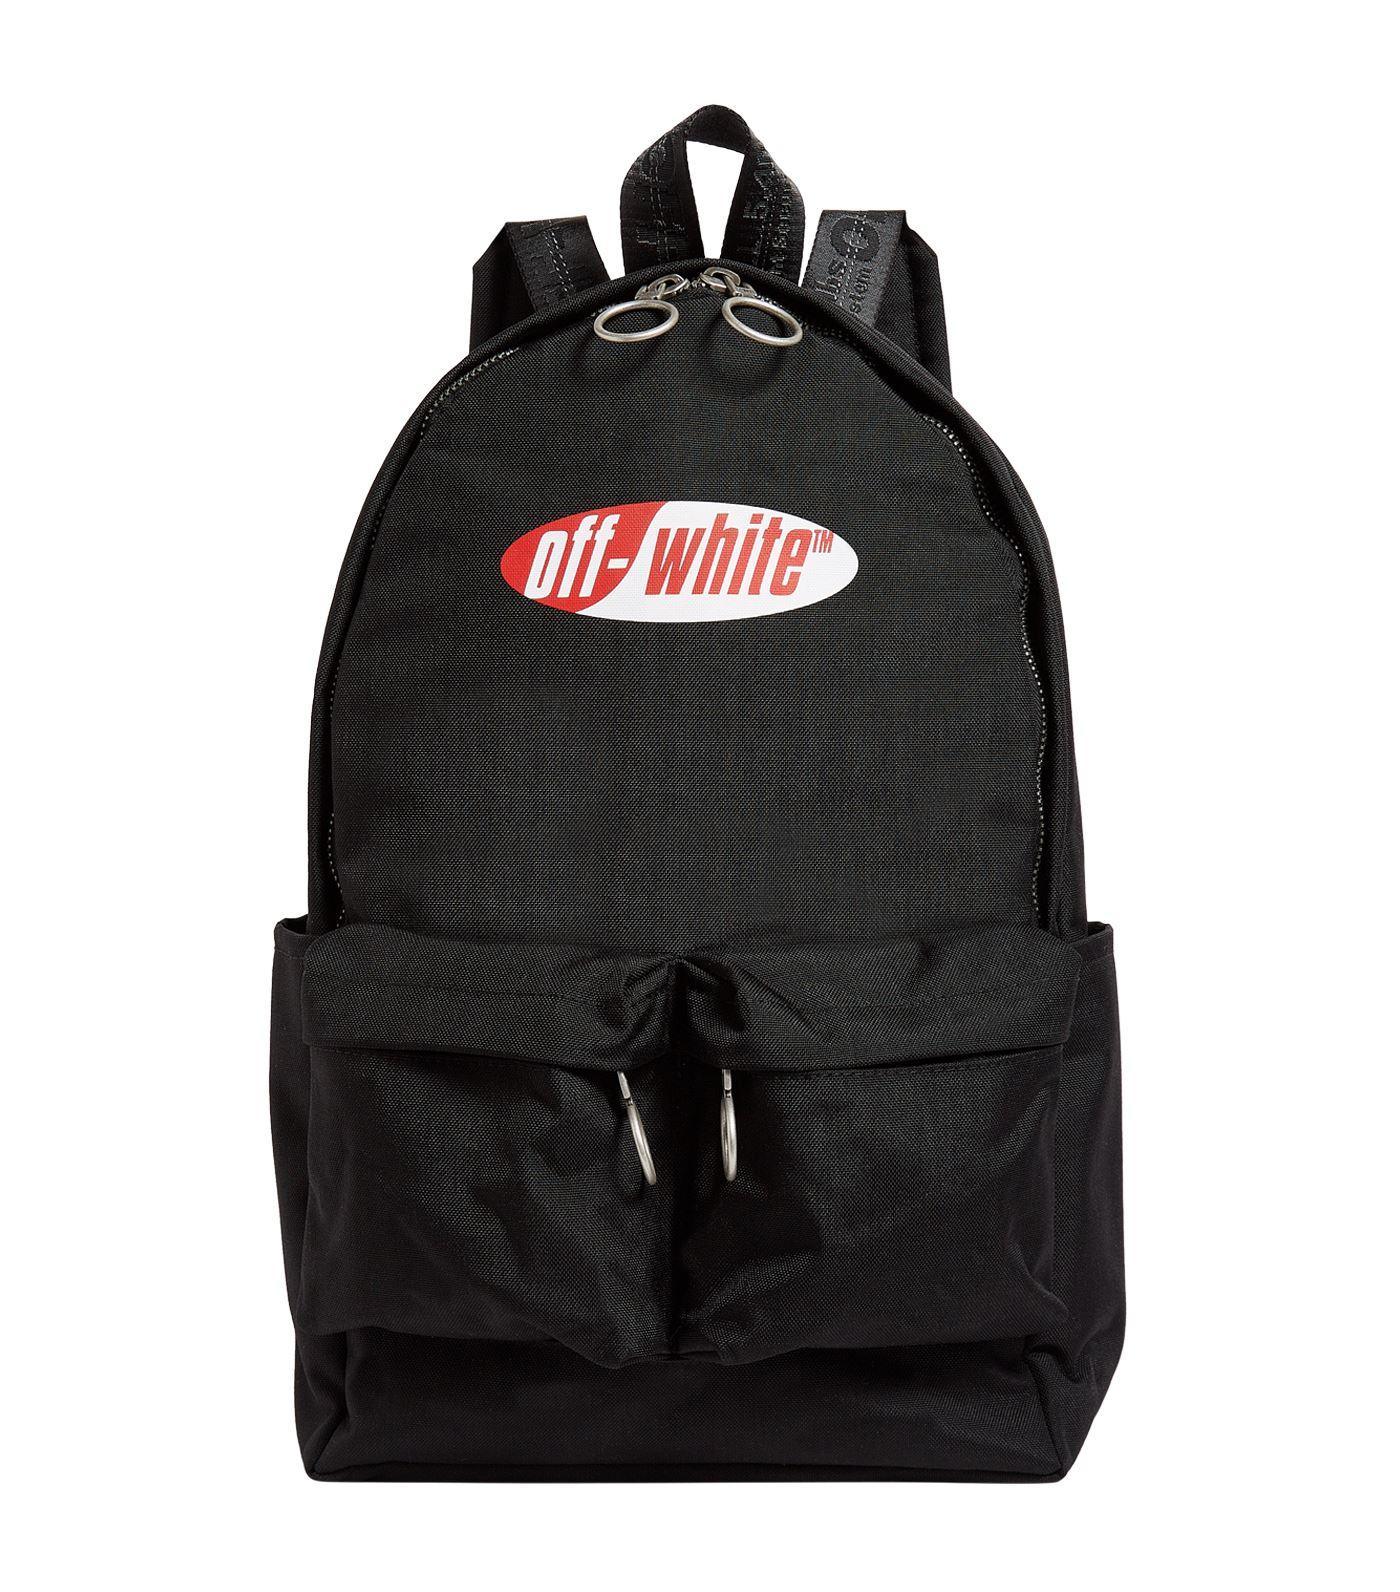 Off-White c/o Virgil Abloh Canvas Logo Backpack in Black for Men - Lyst